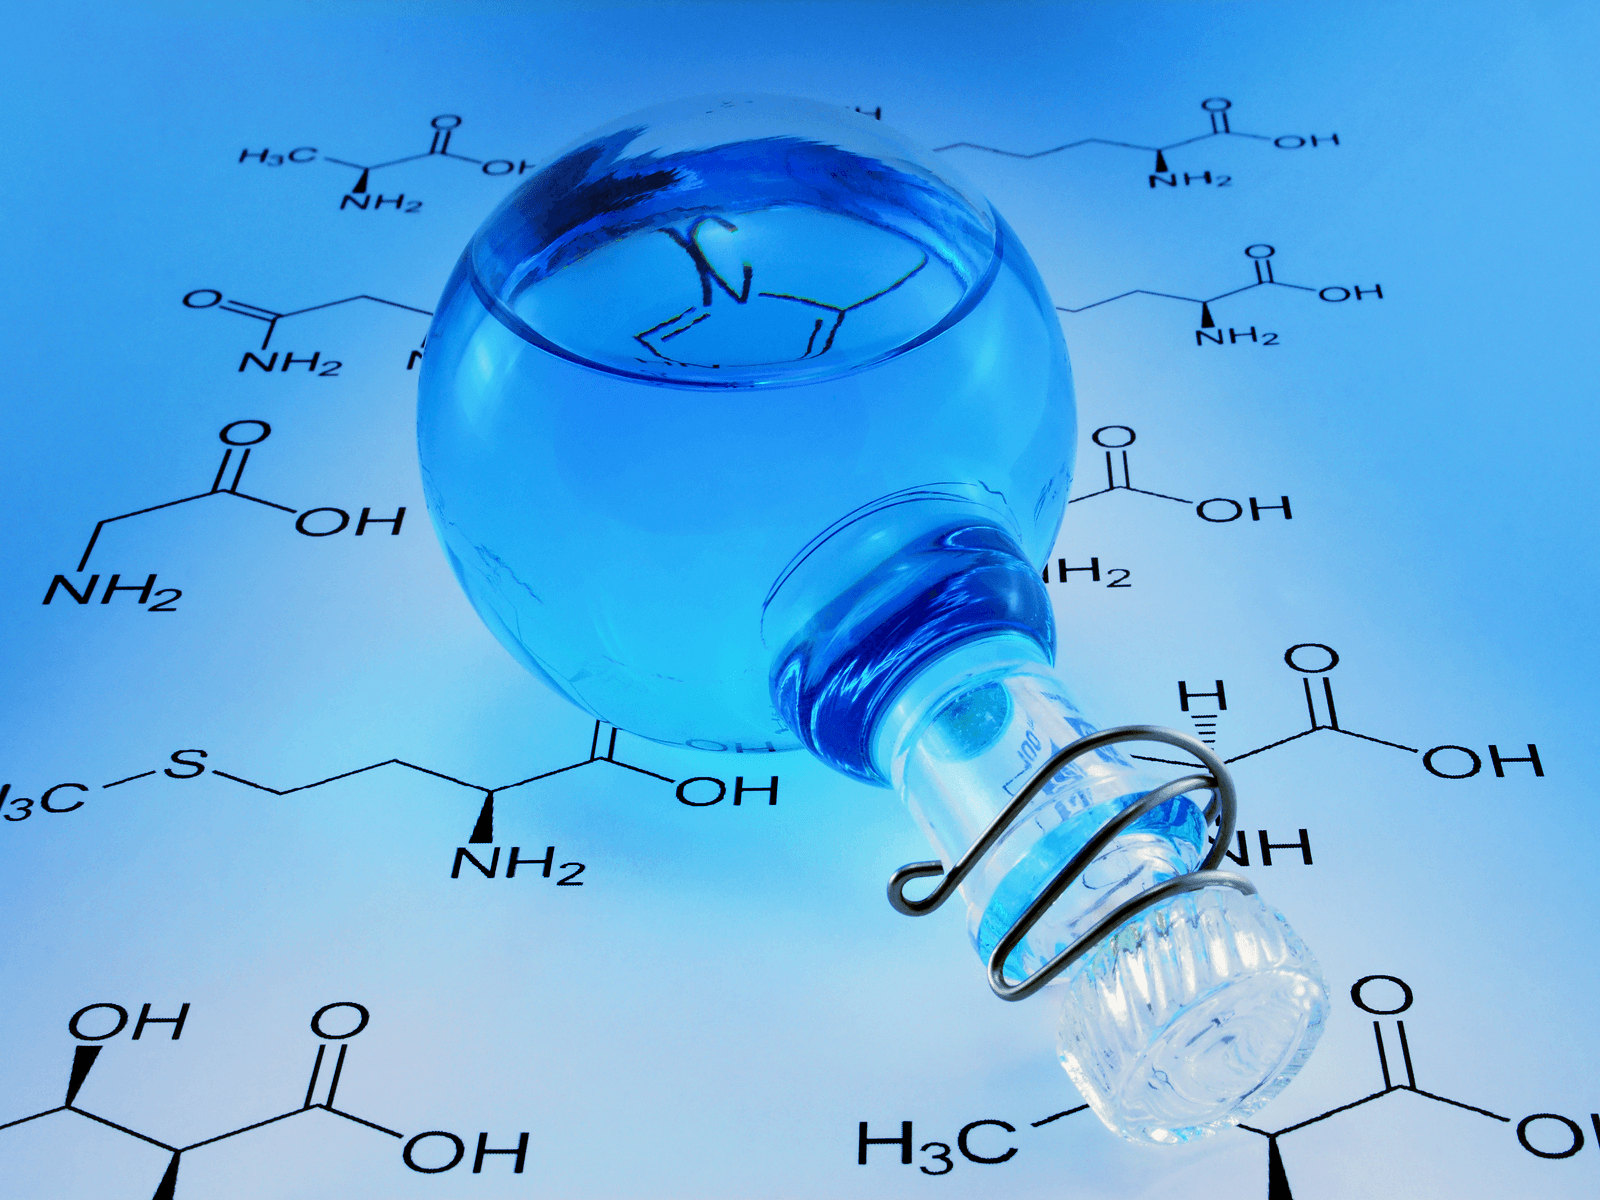 kane blog picz: Chemistry Wallpaper iPhone